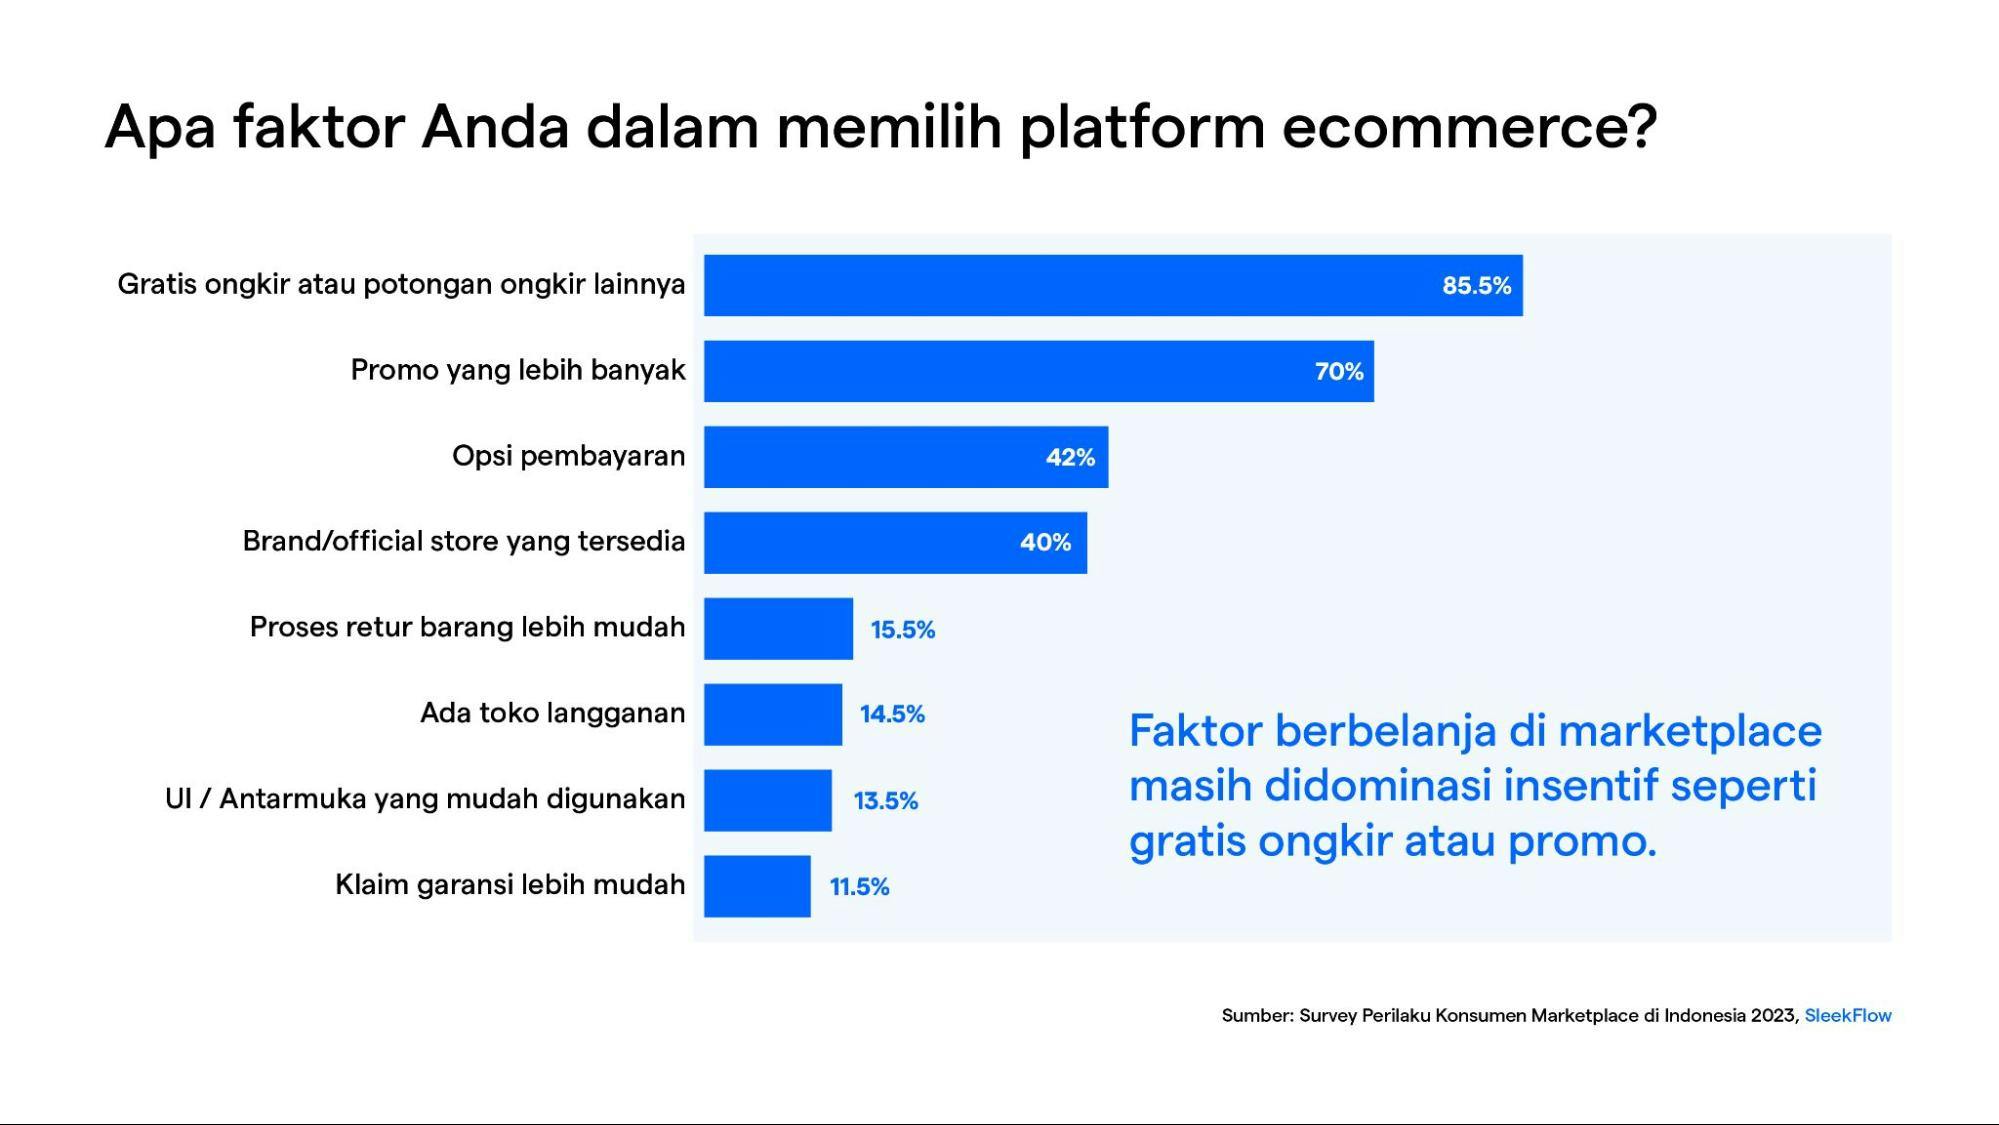 Faktor memilih platform ecommerce